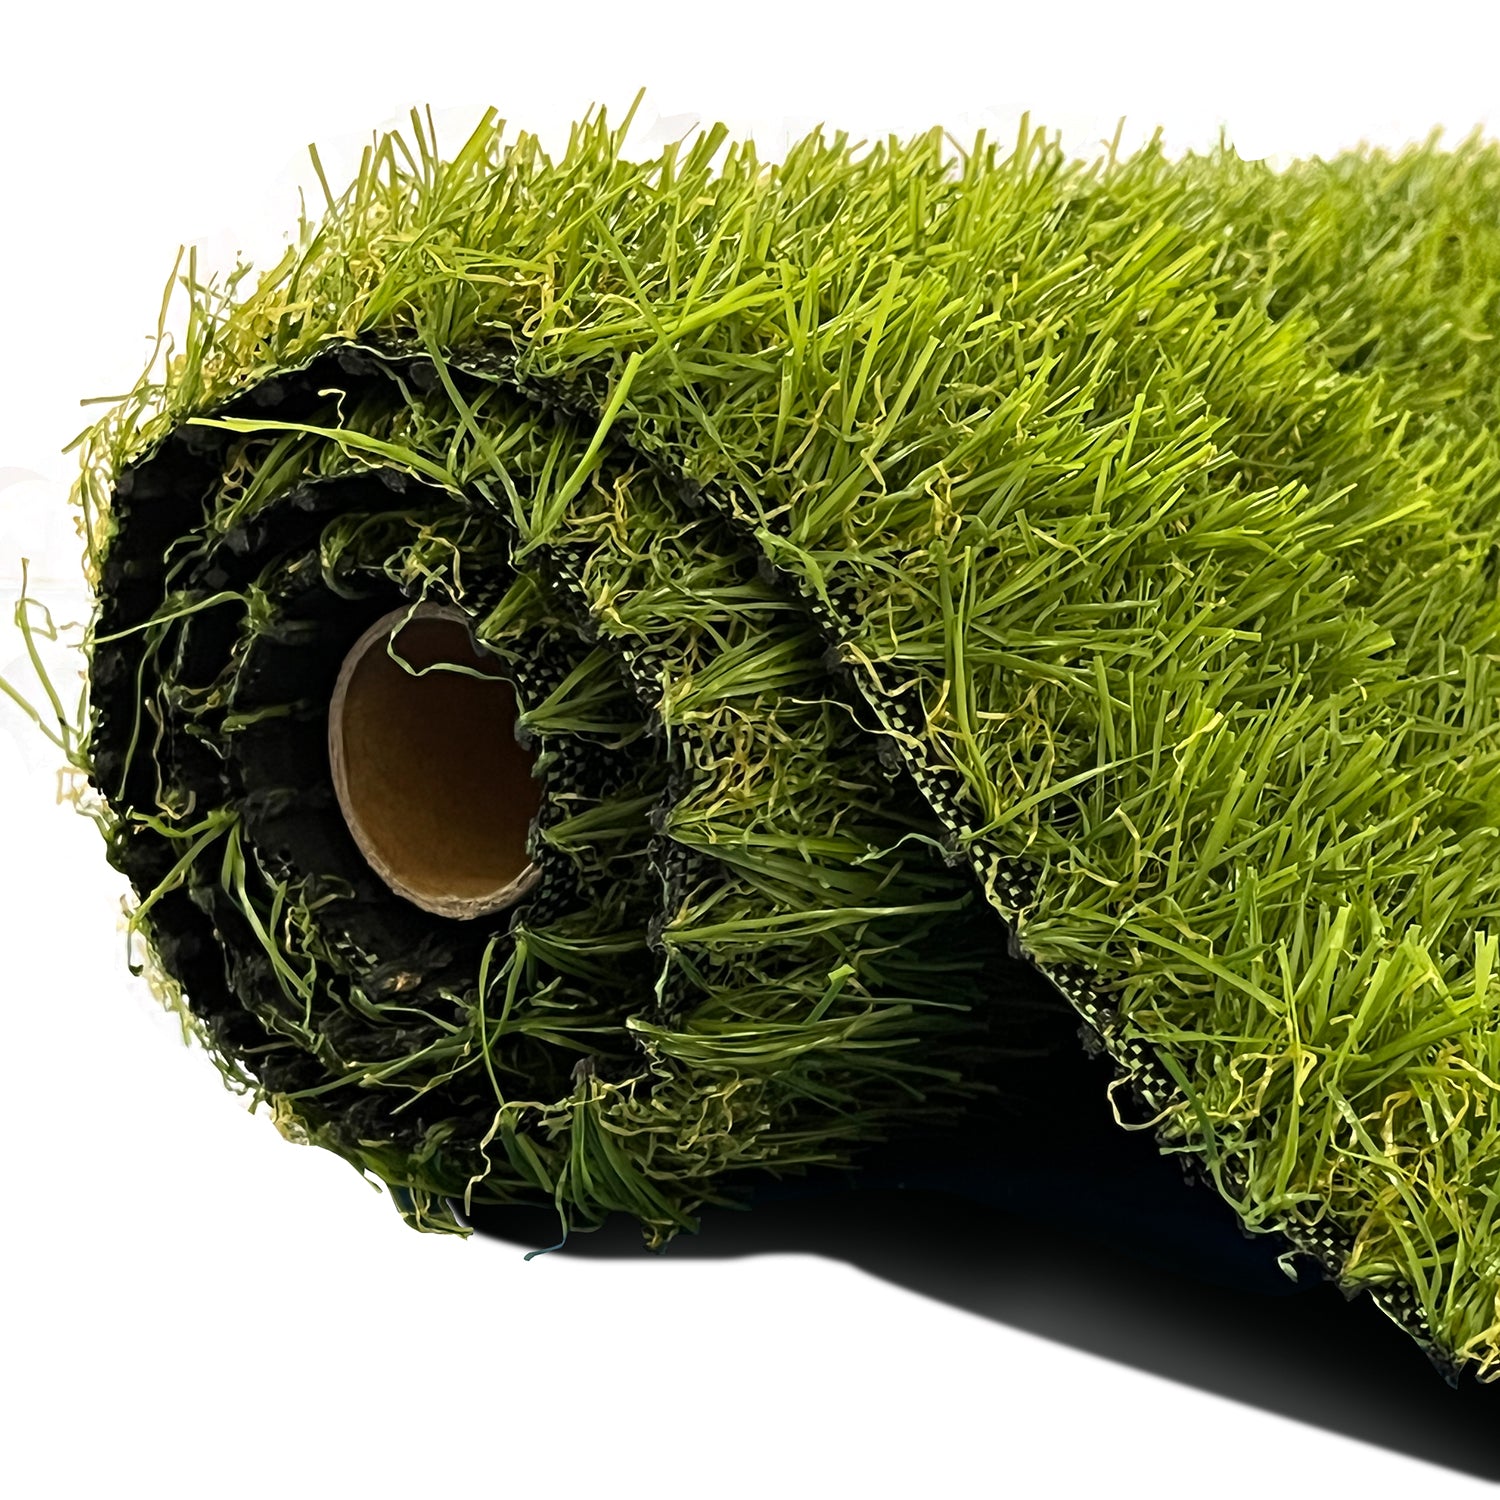 Seven advantages of artificial outdoor grass rug